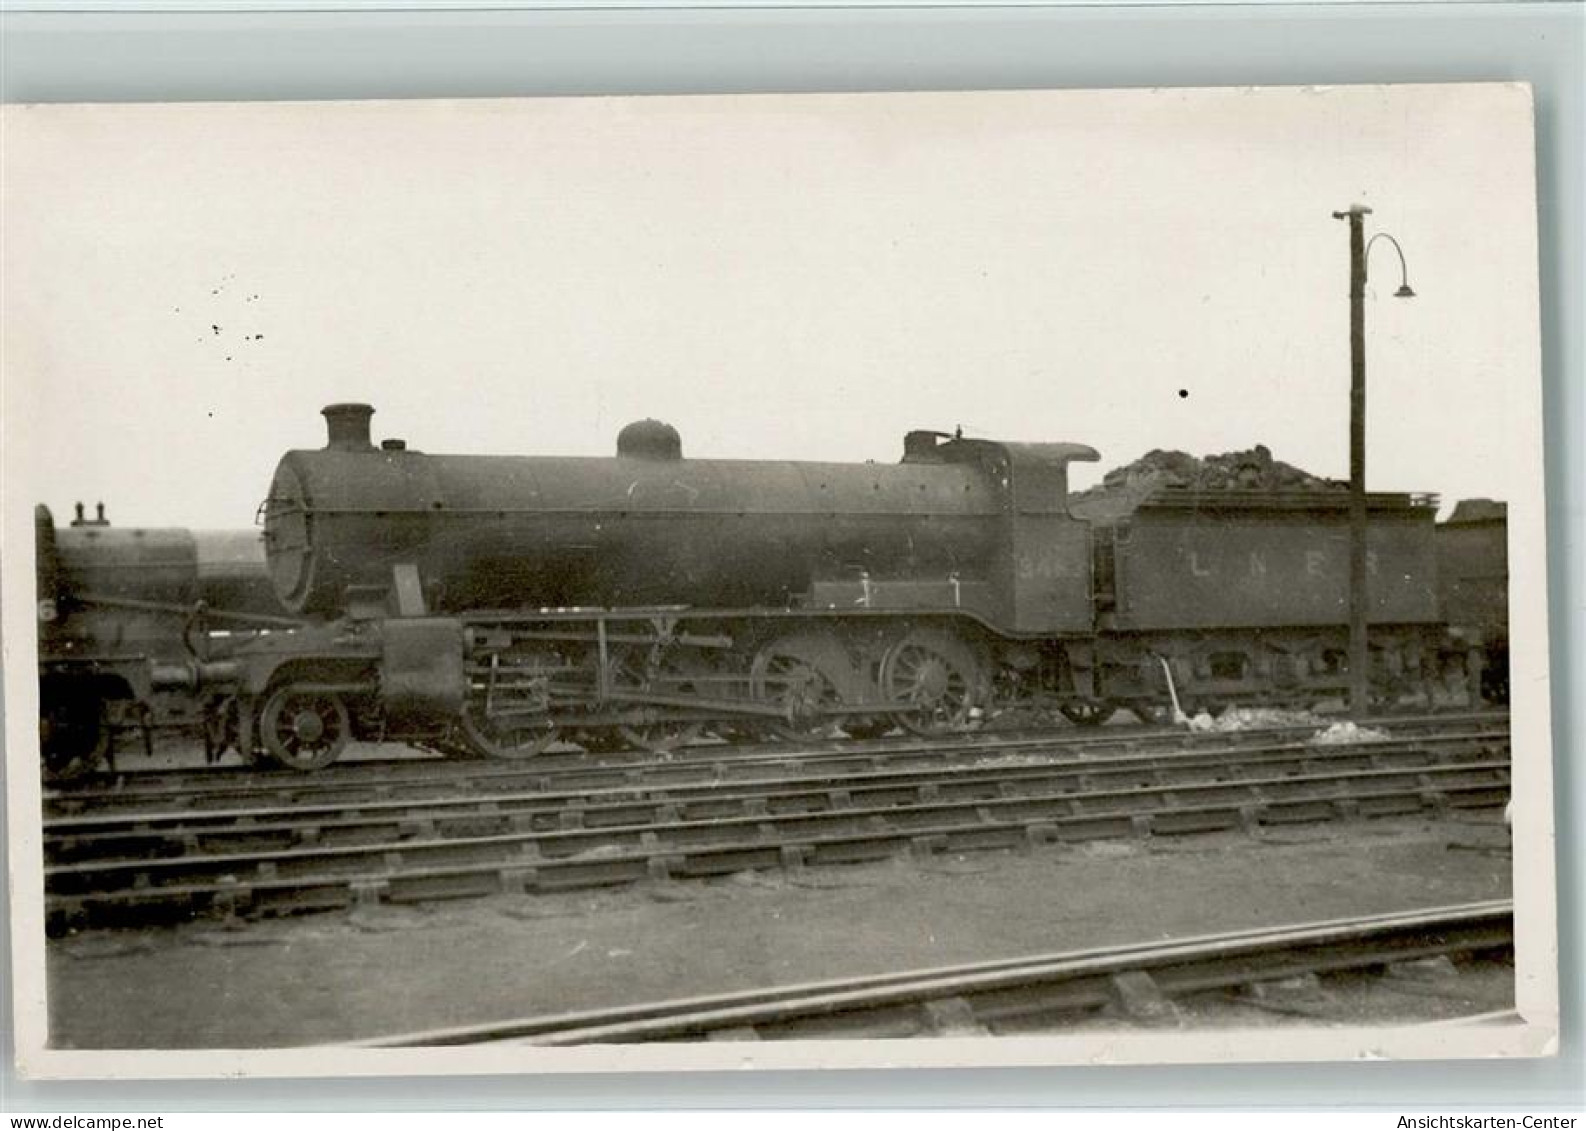 10142209 - Lokomotiven Ausland 3483 - Eisenbahnen